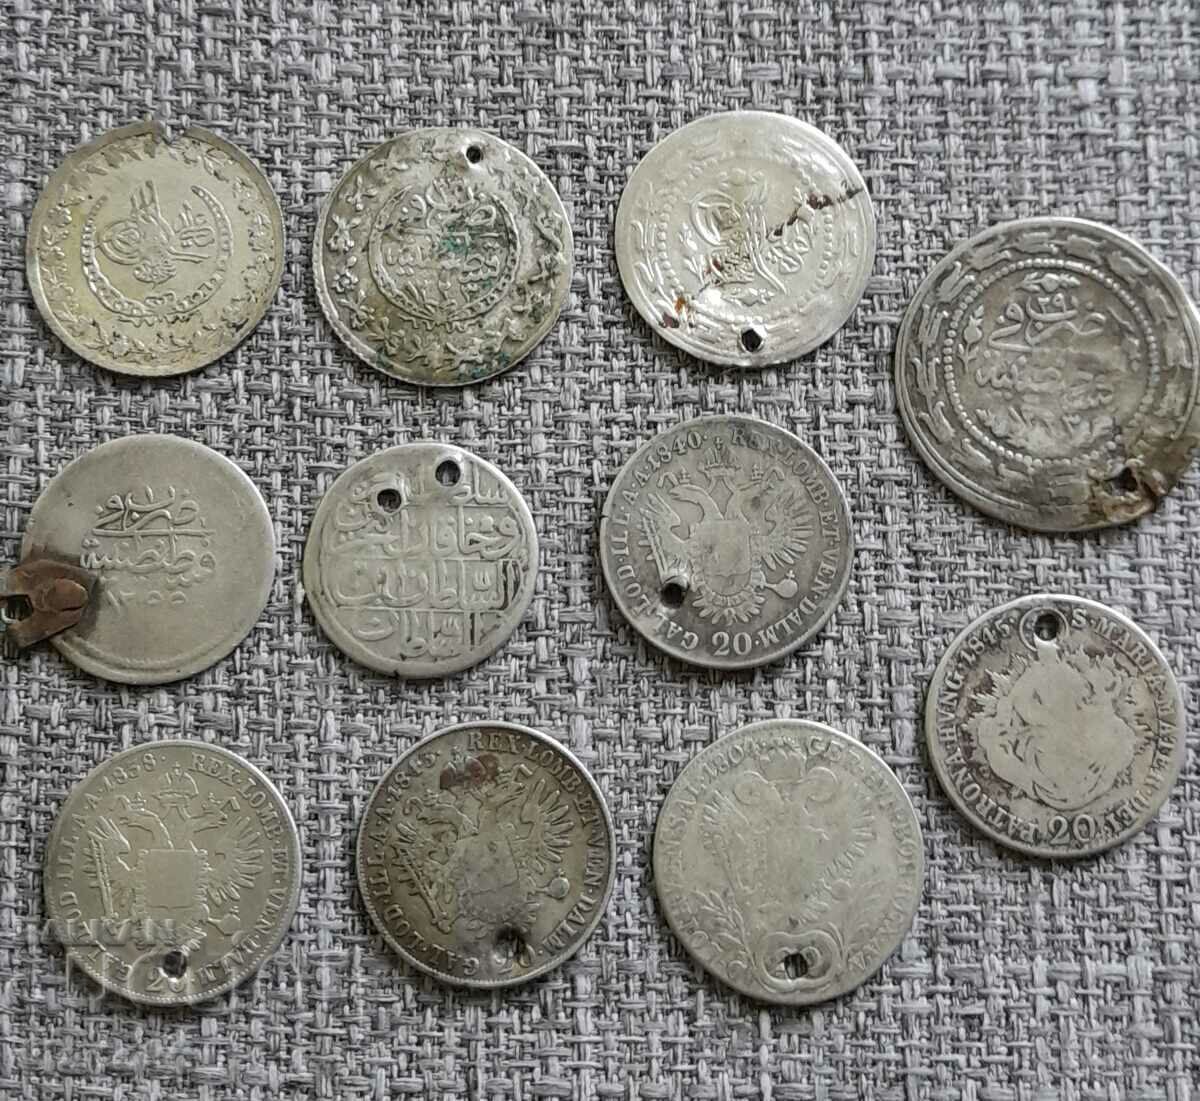 11 monede de argint otomane și austriece